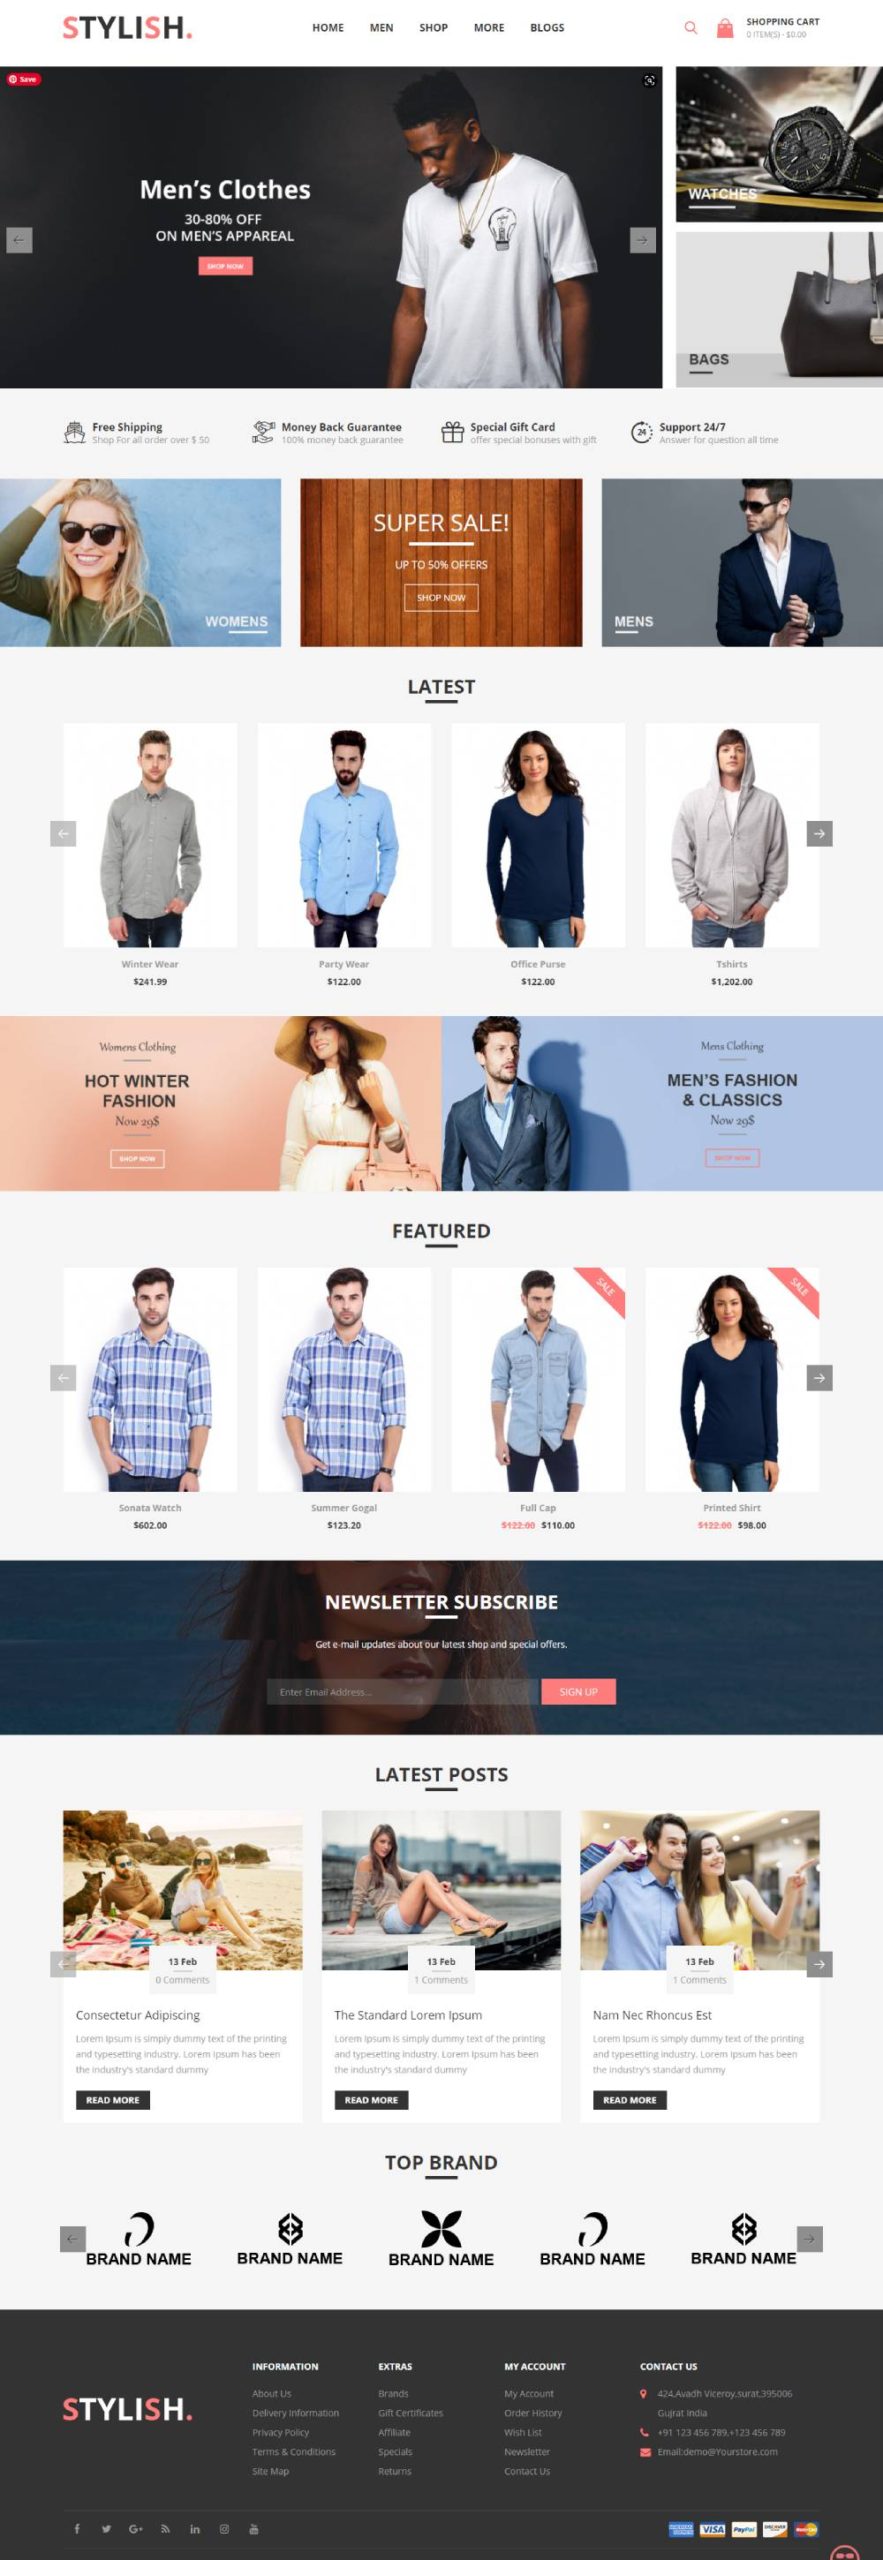 amazing ecommerce website design